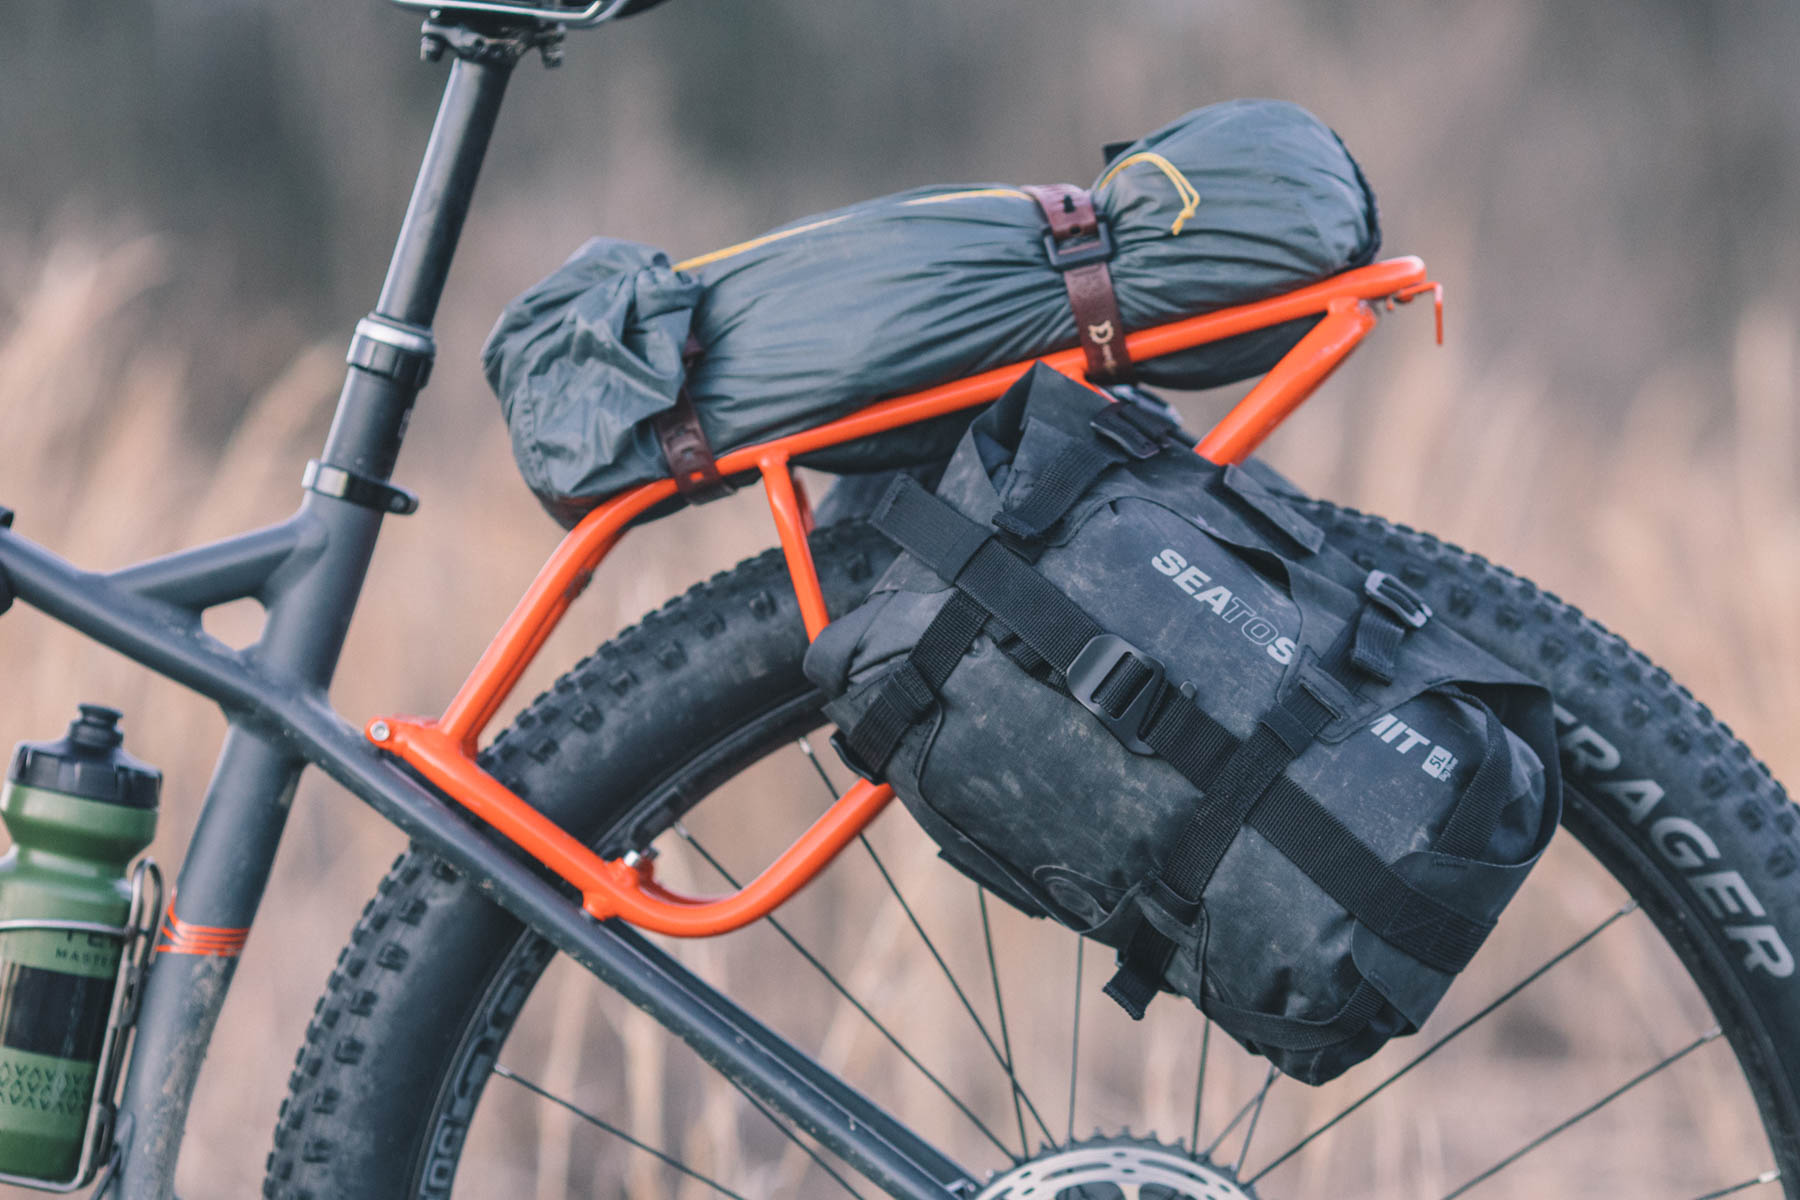 bags trek mountain bike